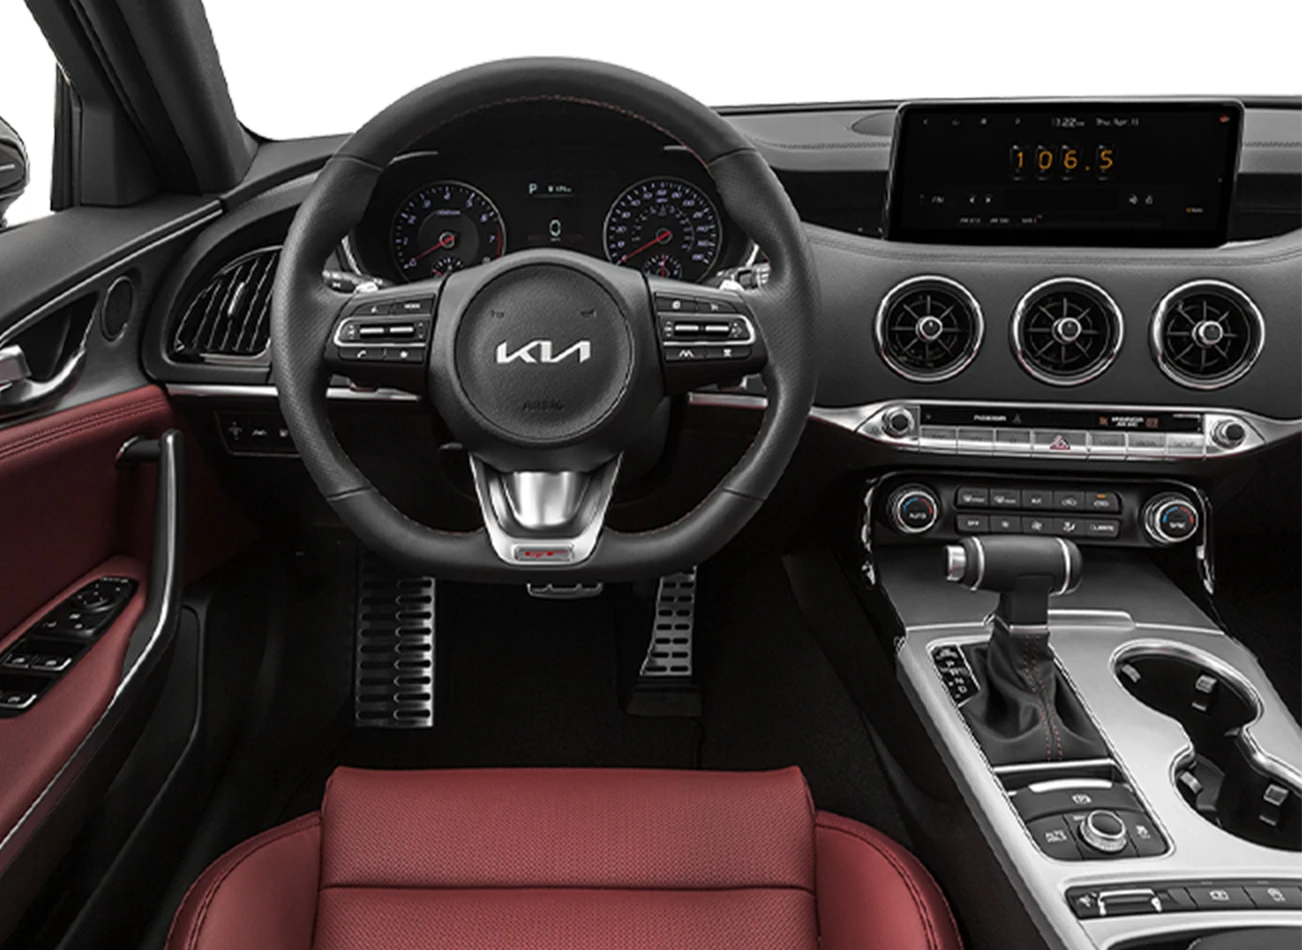 2022 Kia Stinger: Reviews, Photos, and More: Reasons to Buy #3 | CarMax